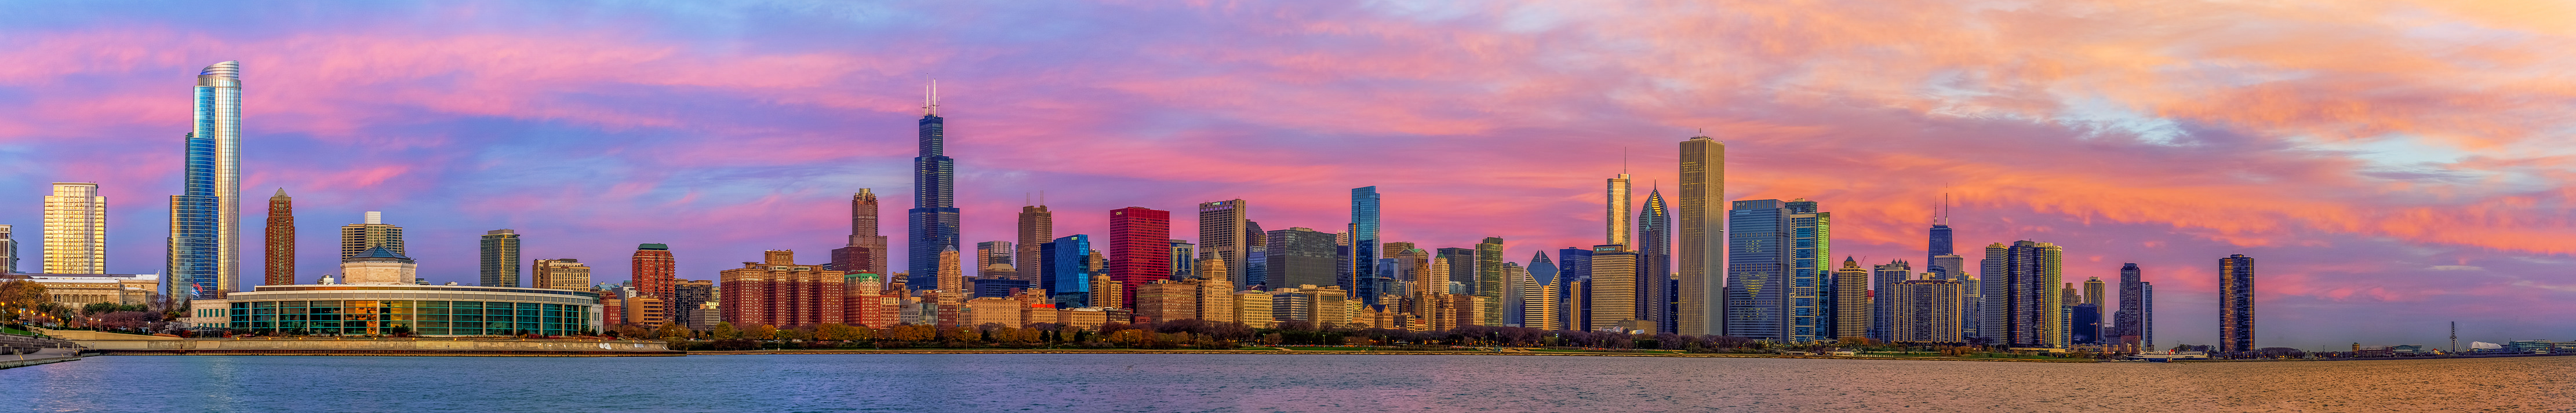 Chicago Sunrise Panorama